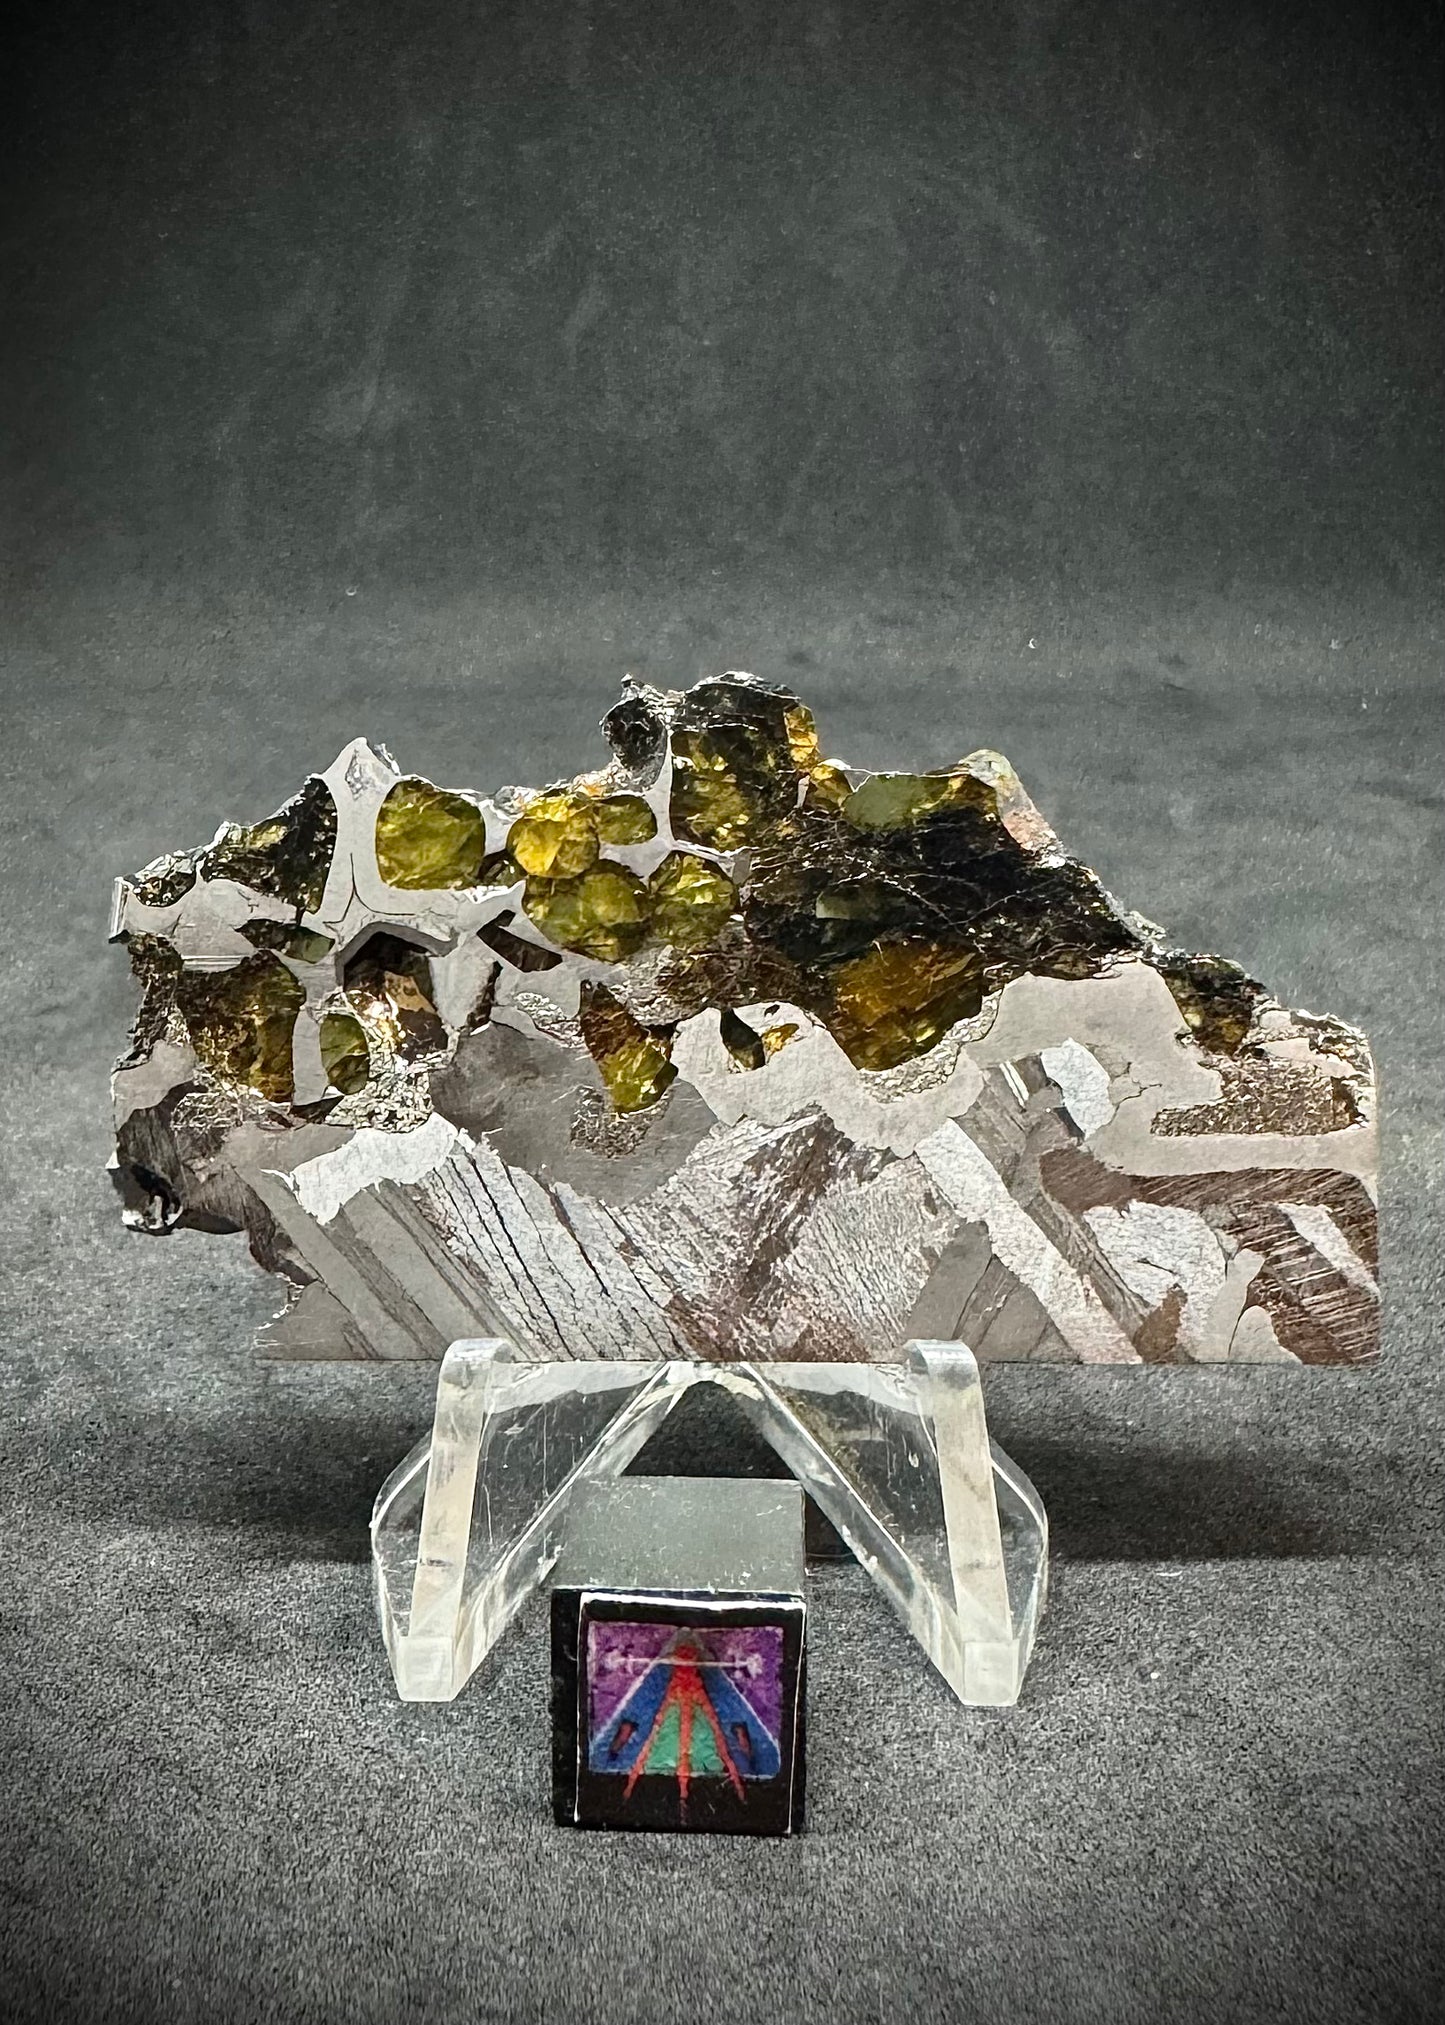 Seymchan Pallasite Meteorite - 23.9g